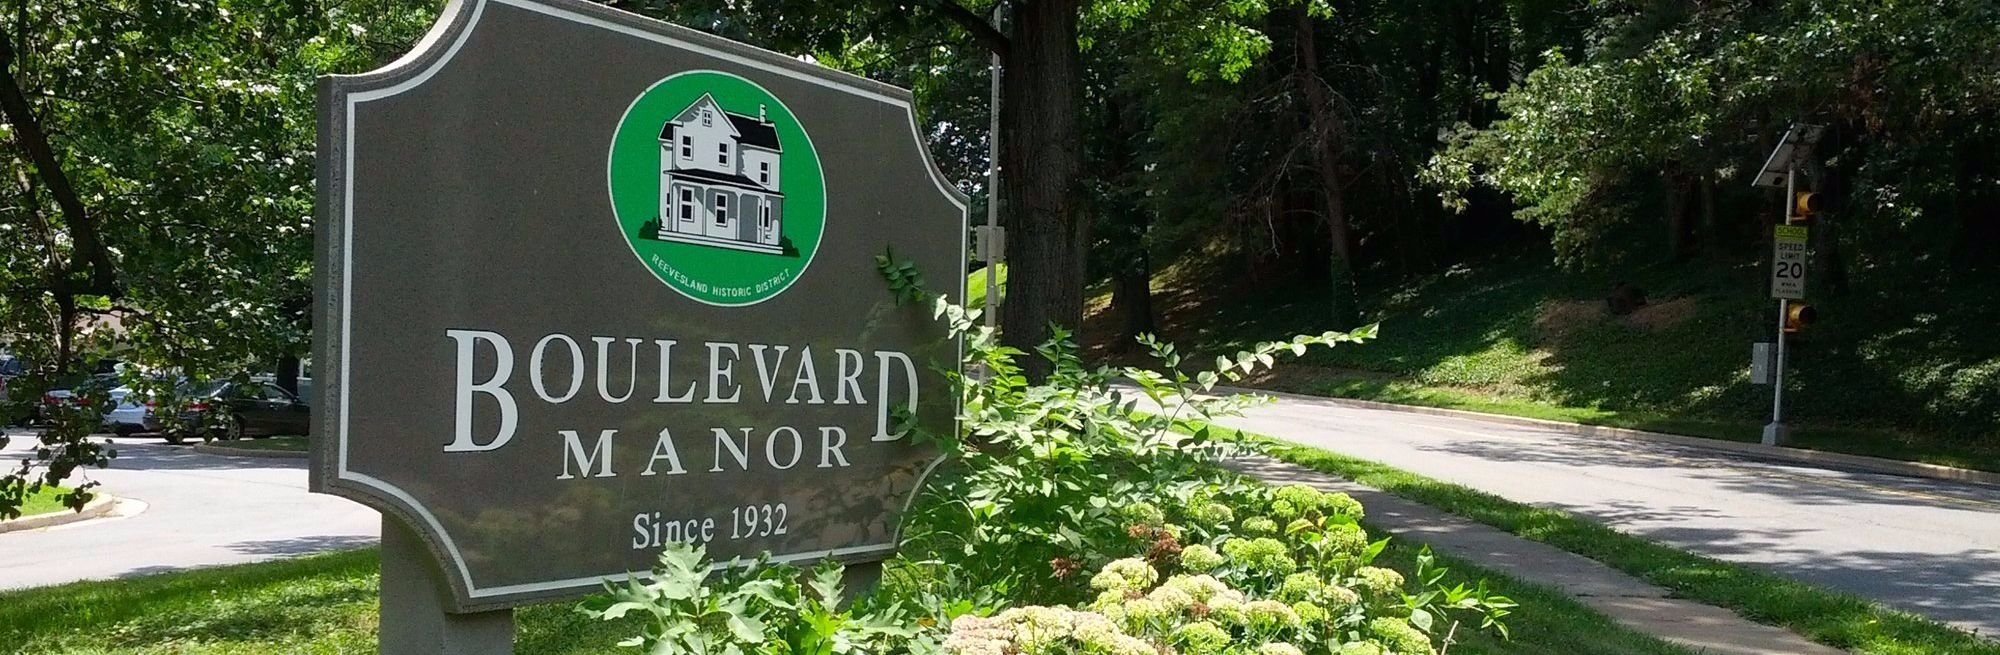 Boulevard Manor condos for sale